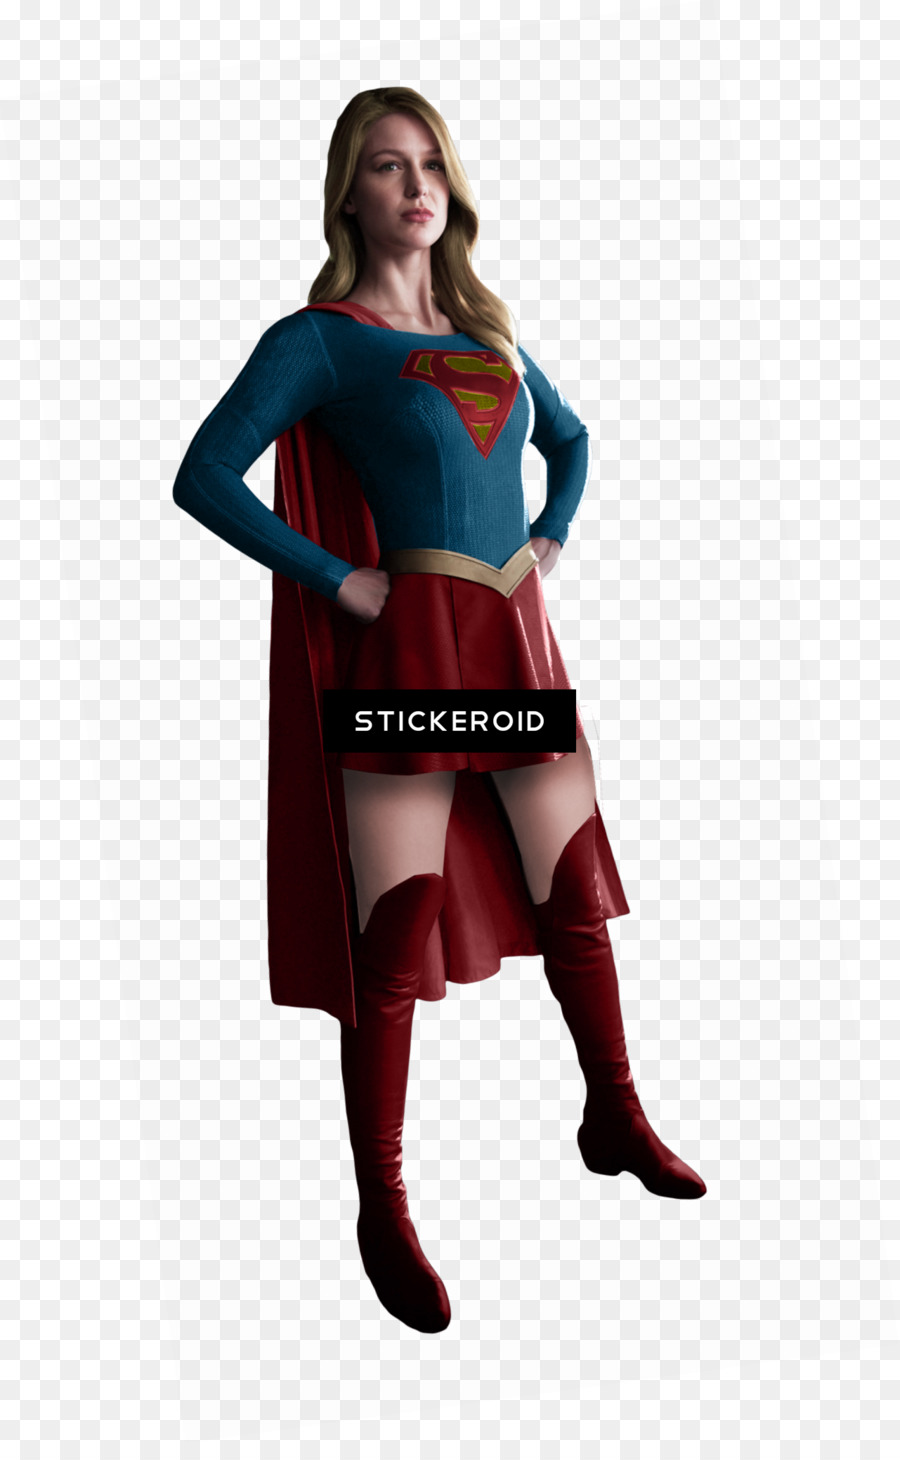 Superman Portable Network Graphics Kara Zor-El Image Transparency - supergirl symbol png image png download - 1281*2052 - Free Transparent Superman png Download.